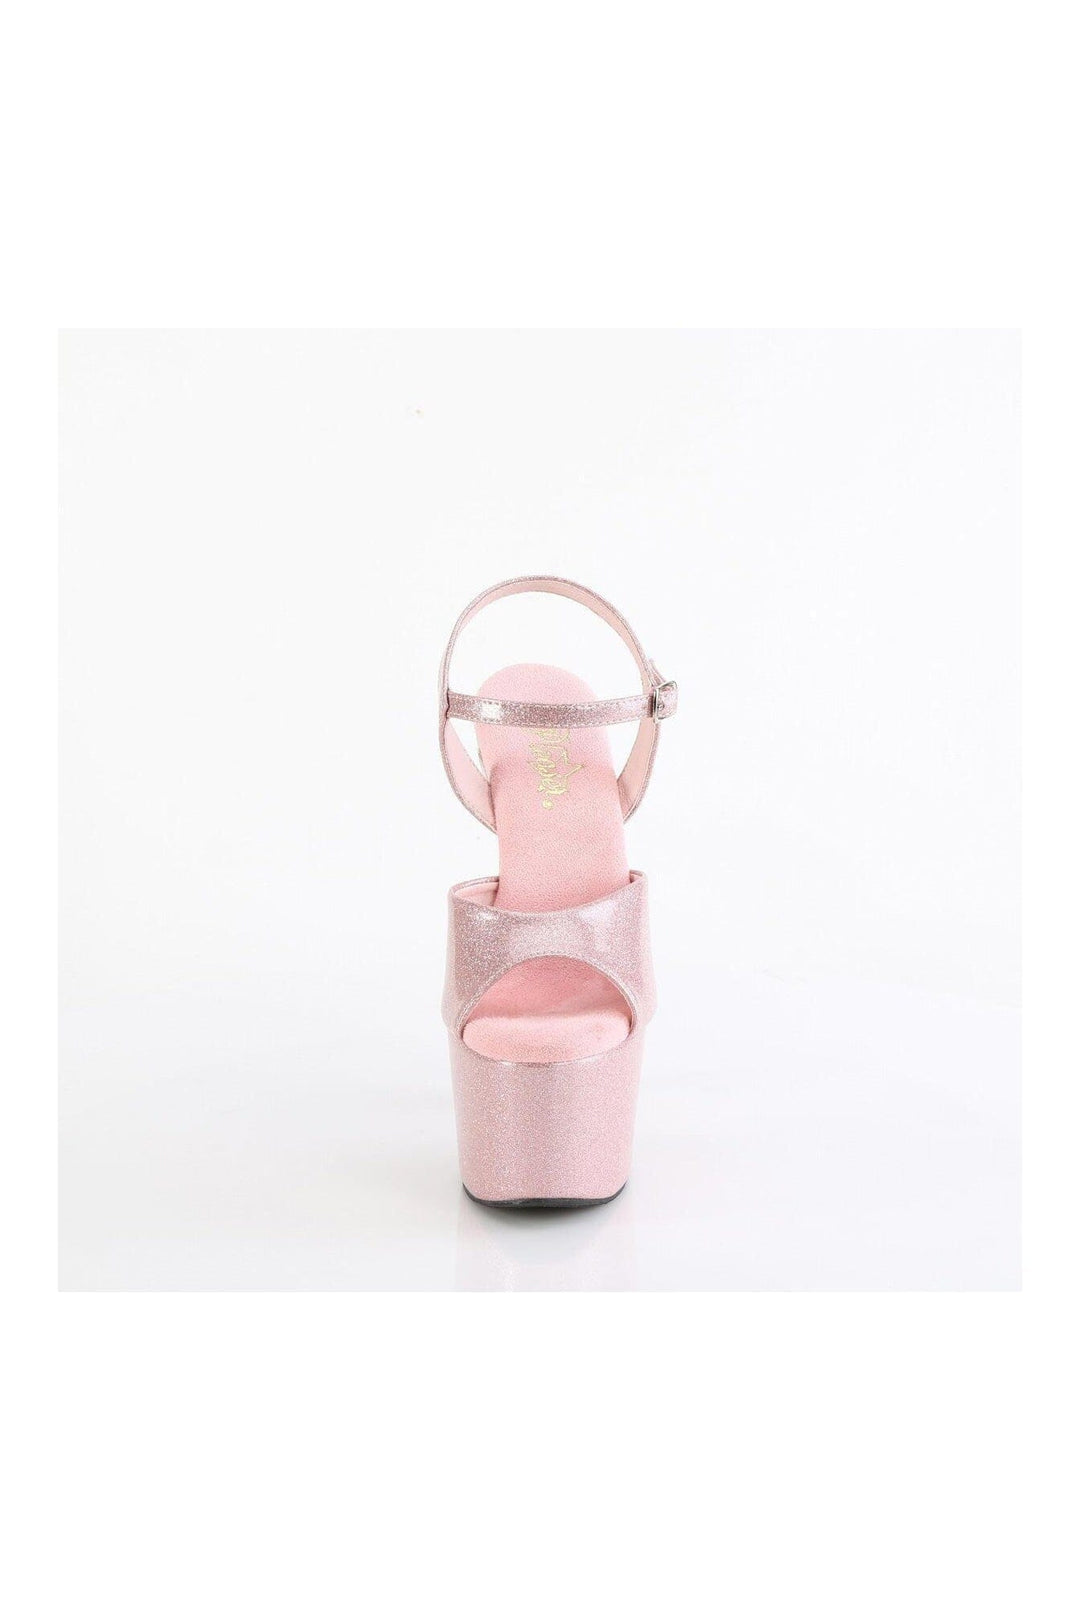 ADORE-709GP Pink Glitter Patent Sandal